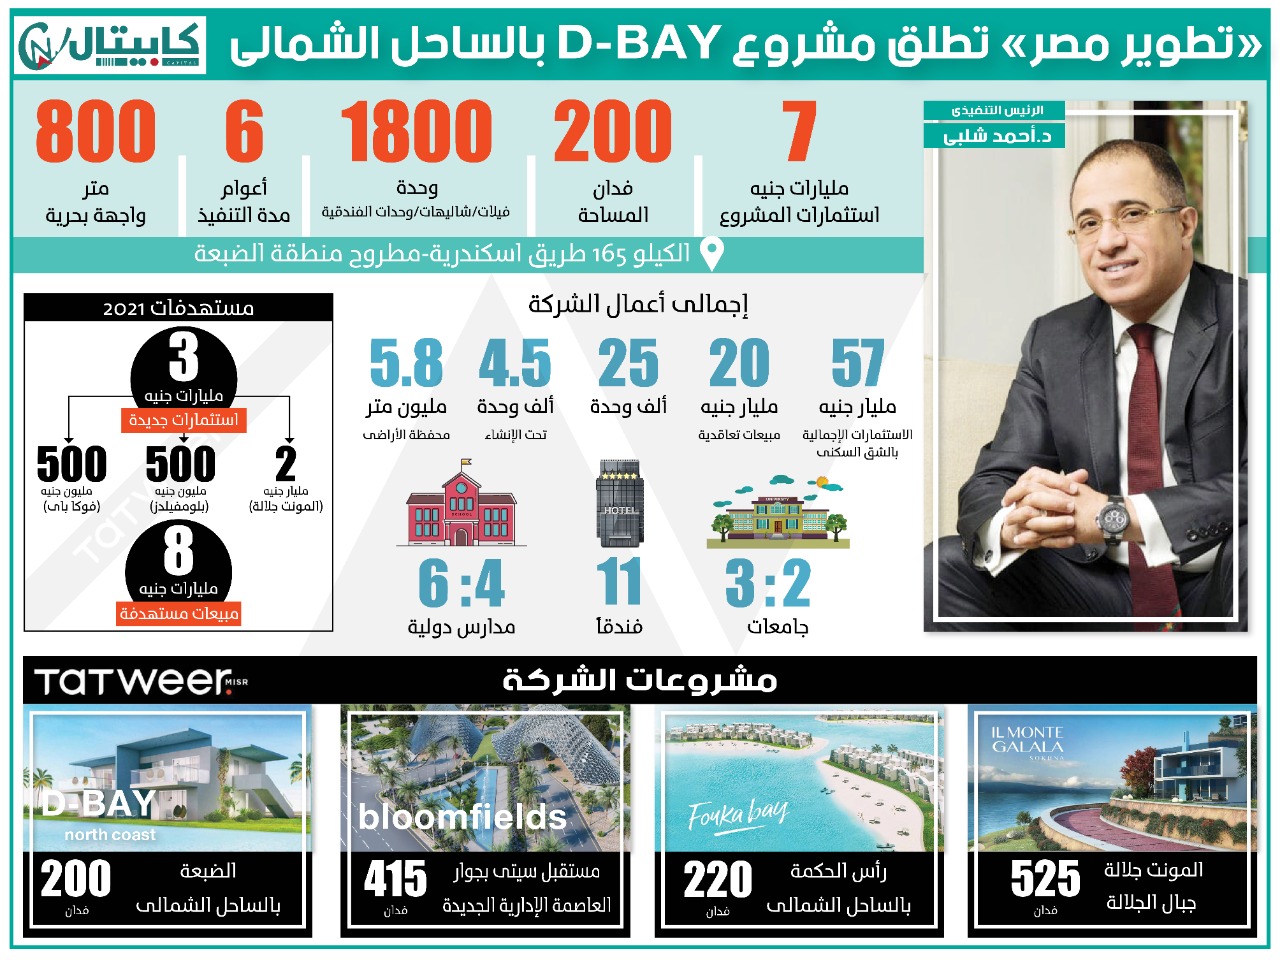 تطوير مصر تطلق مشروع D-BAY